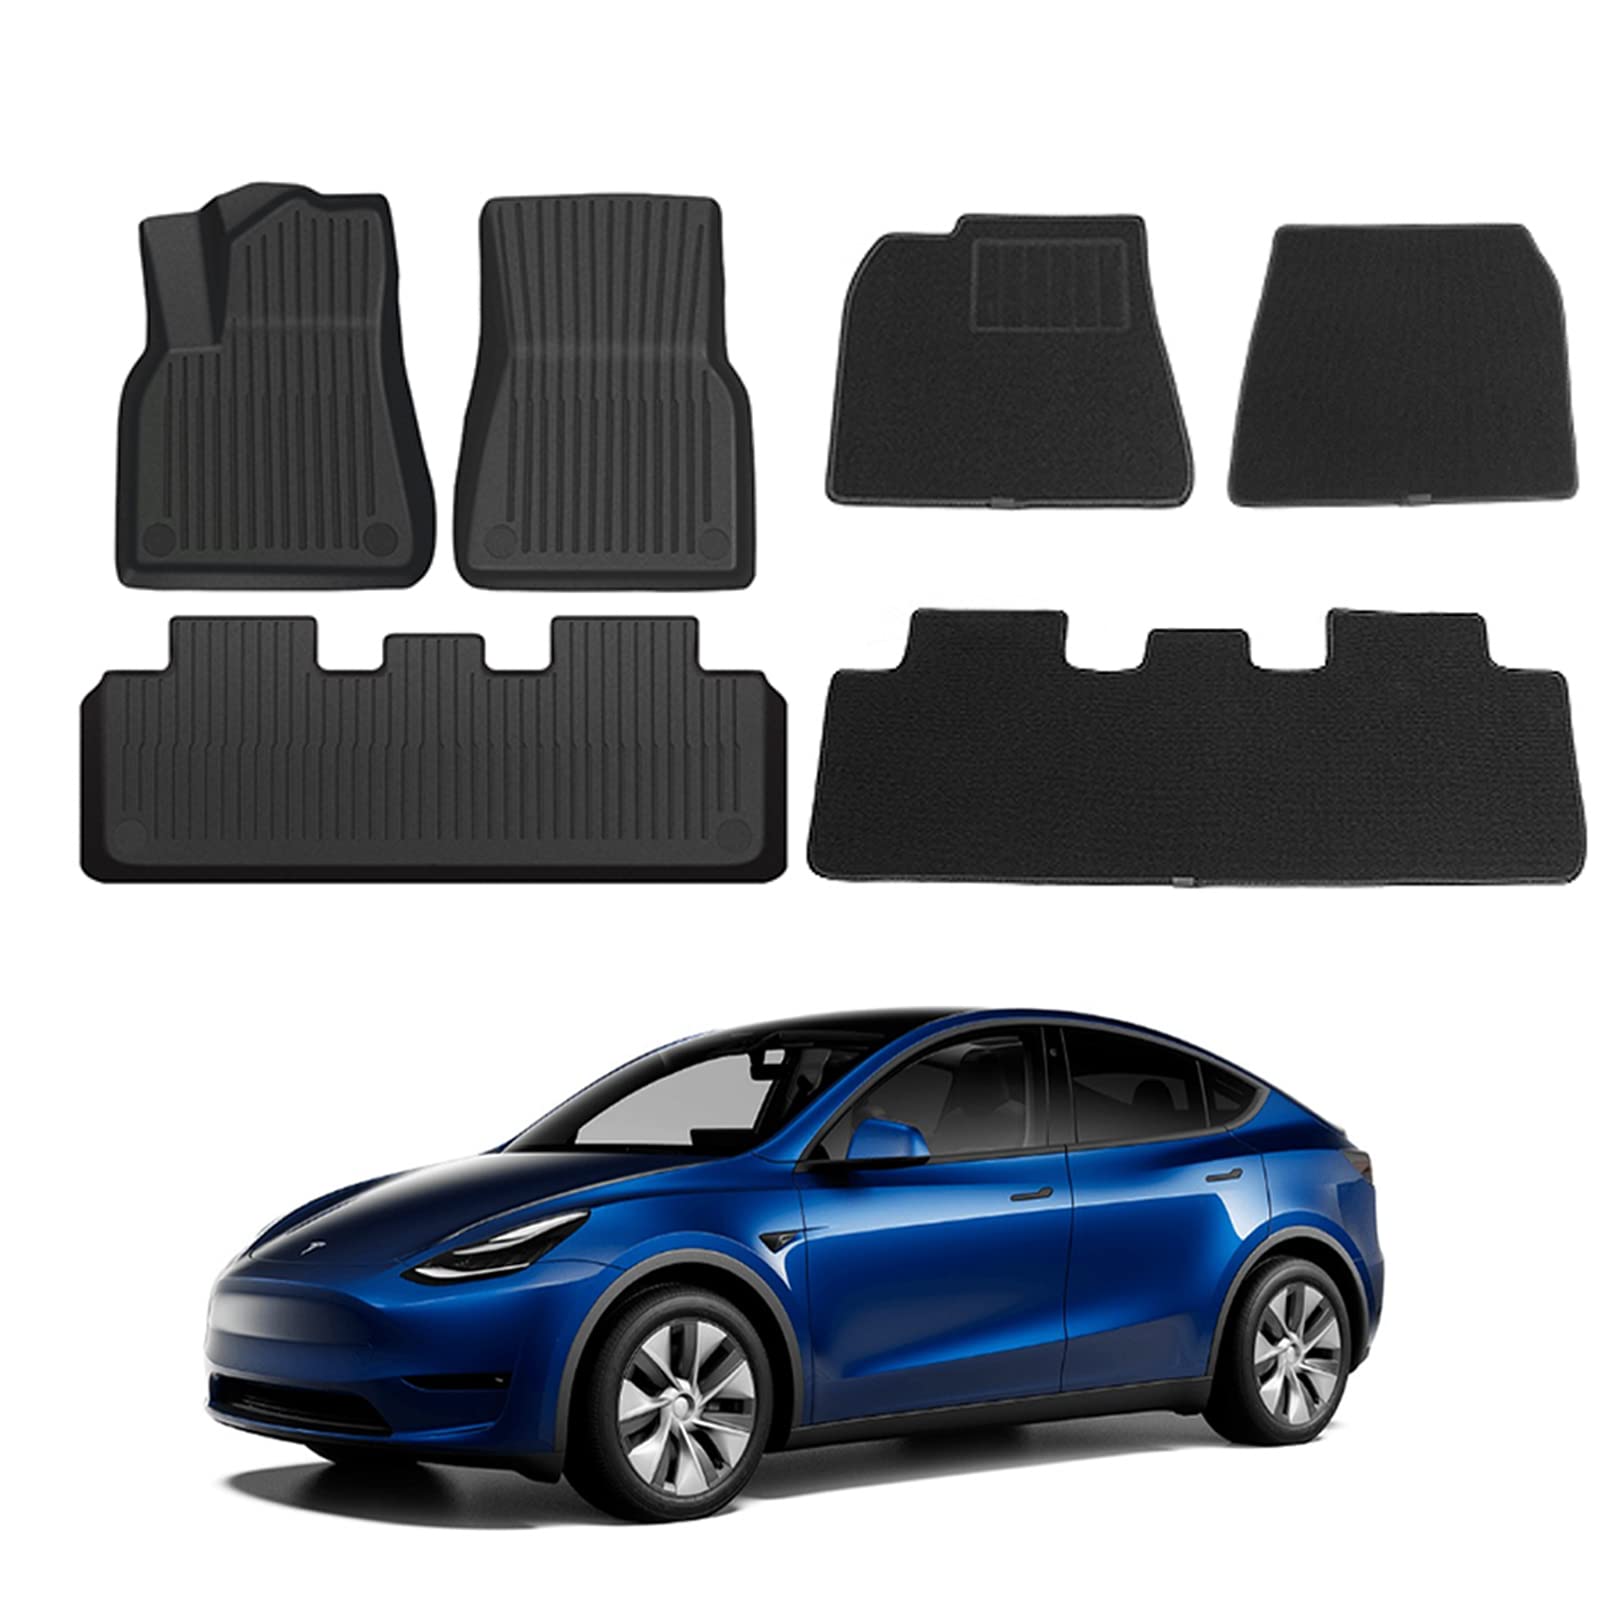 Tesla model Y car floor mats